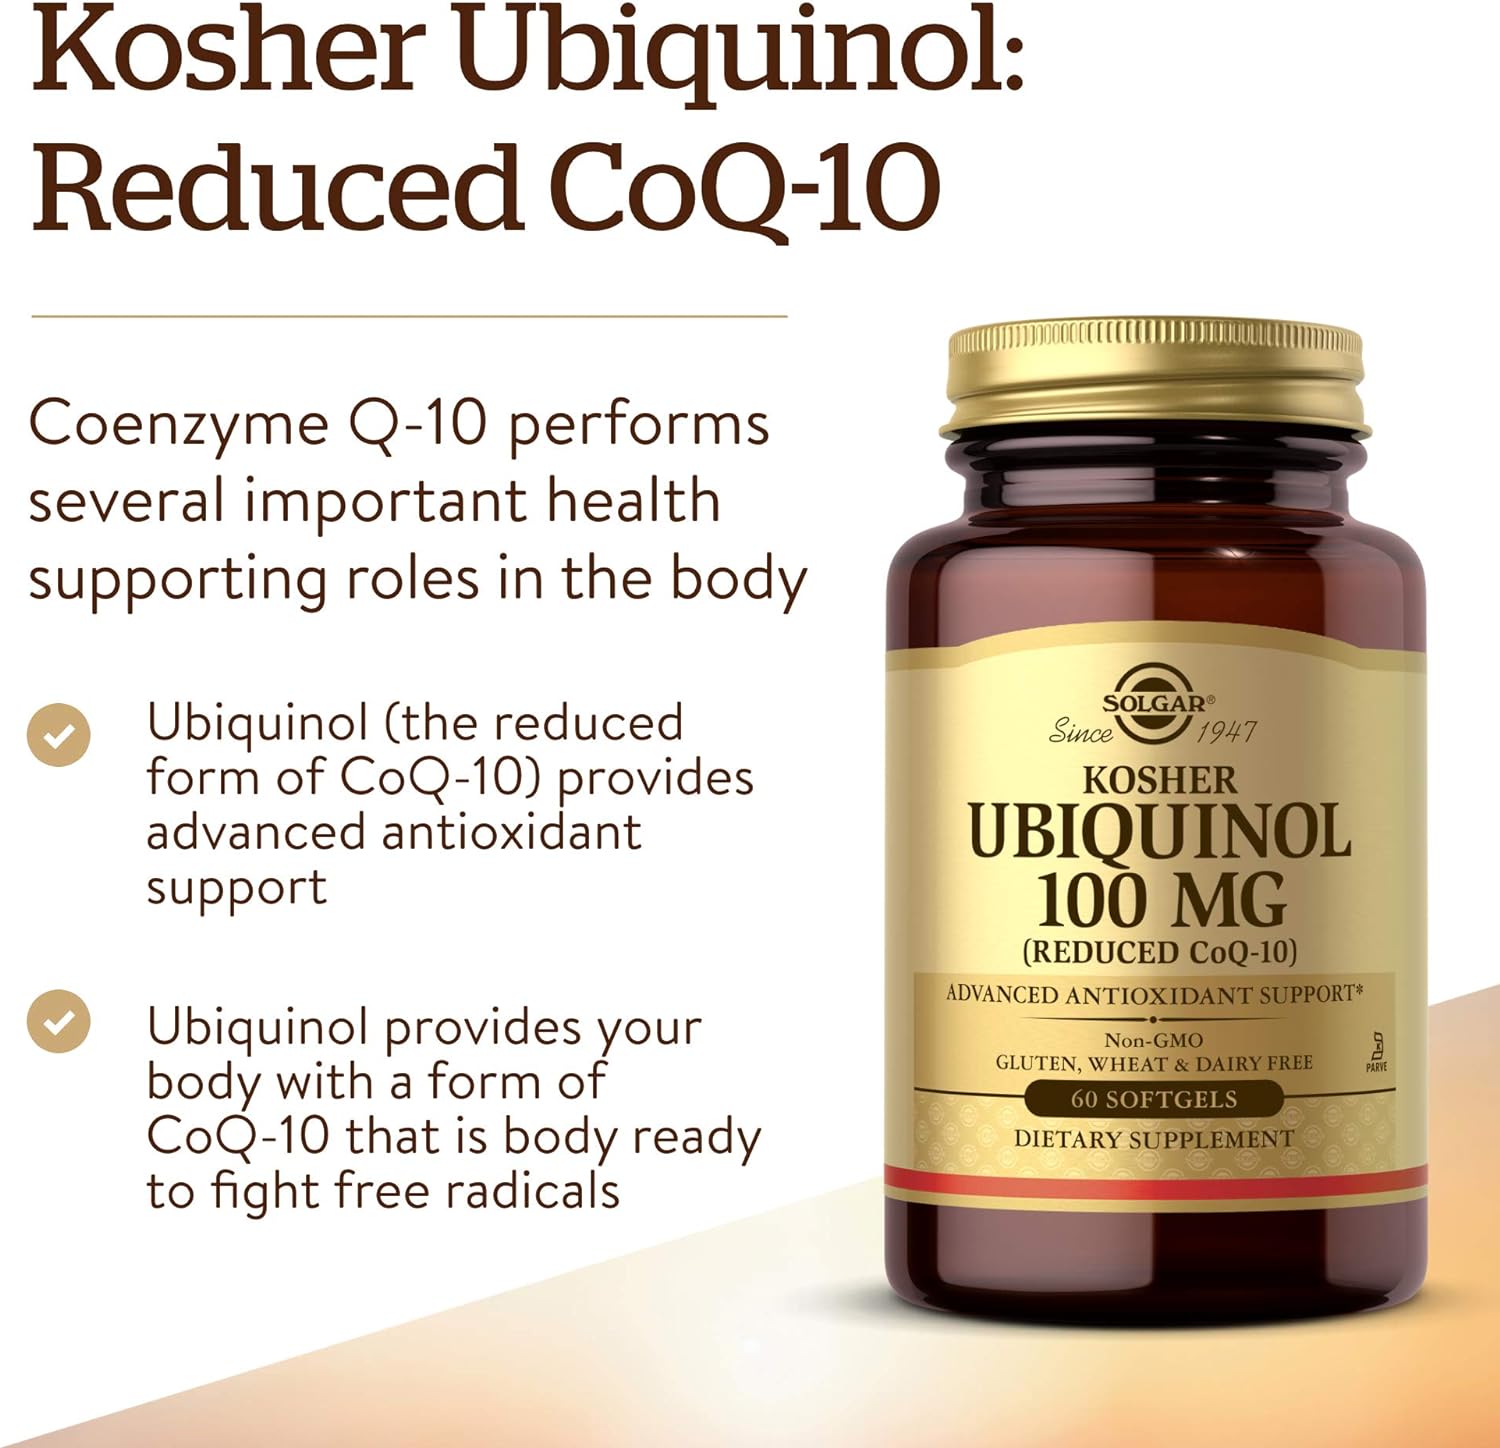 Solgar Kosher Ubiquinol 100mg, 60 Softgels - Advanced Antioxidant Supp